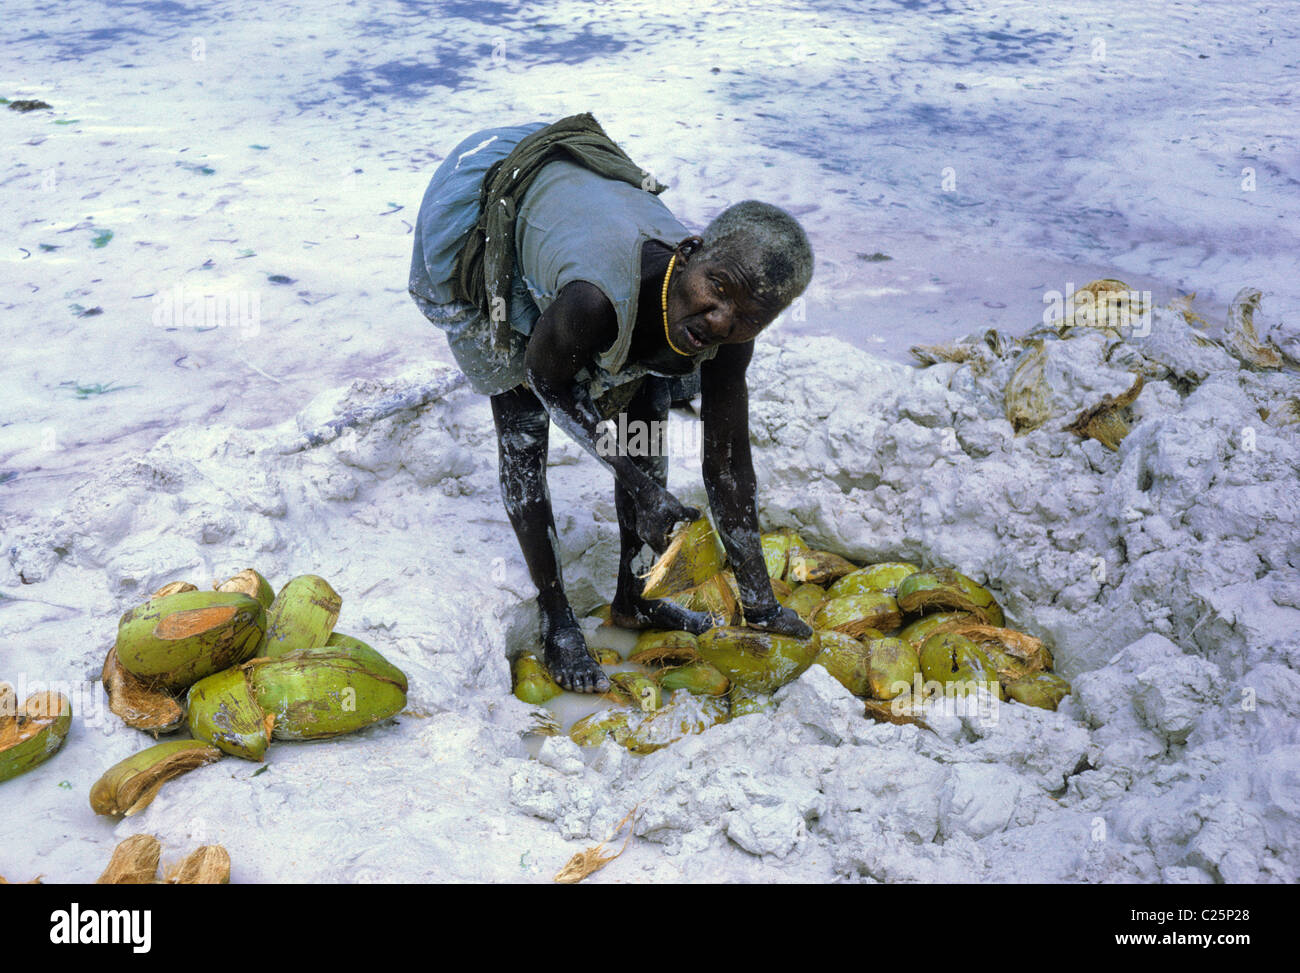 Jambiani, Zanzibar, Tanzania. Woman Gathering Coir (Coconut Husks) after Soaking Several Weeks in Sea Water. Stock Photo